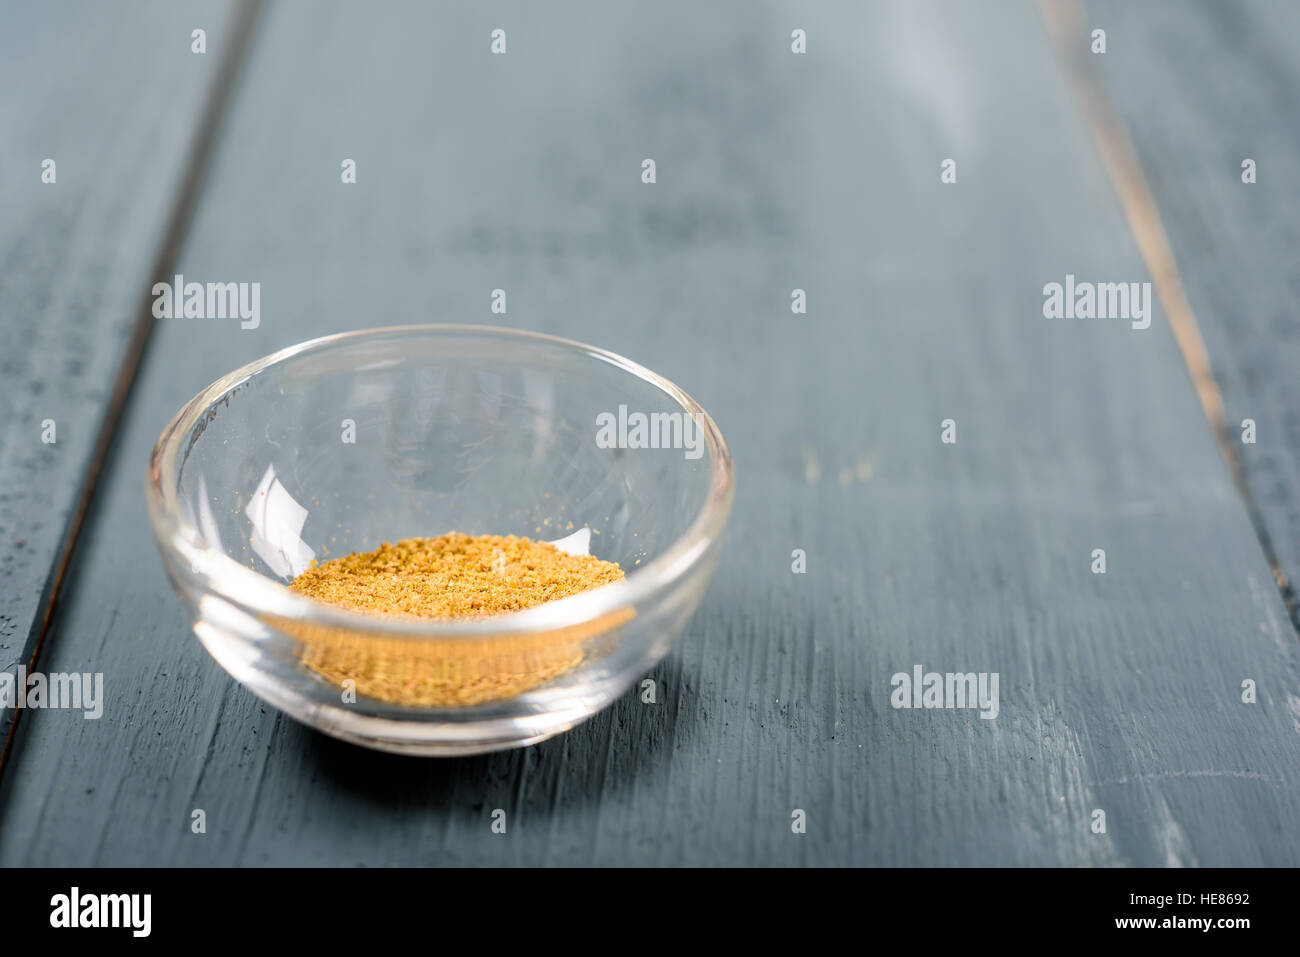 Cumin (Cuminum cyminum) Food Ingredient In Glass Bowl Stock Photo